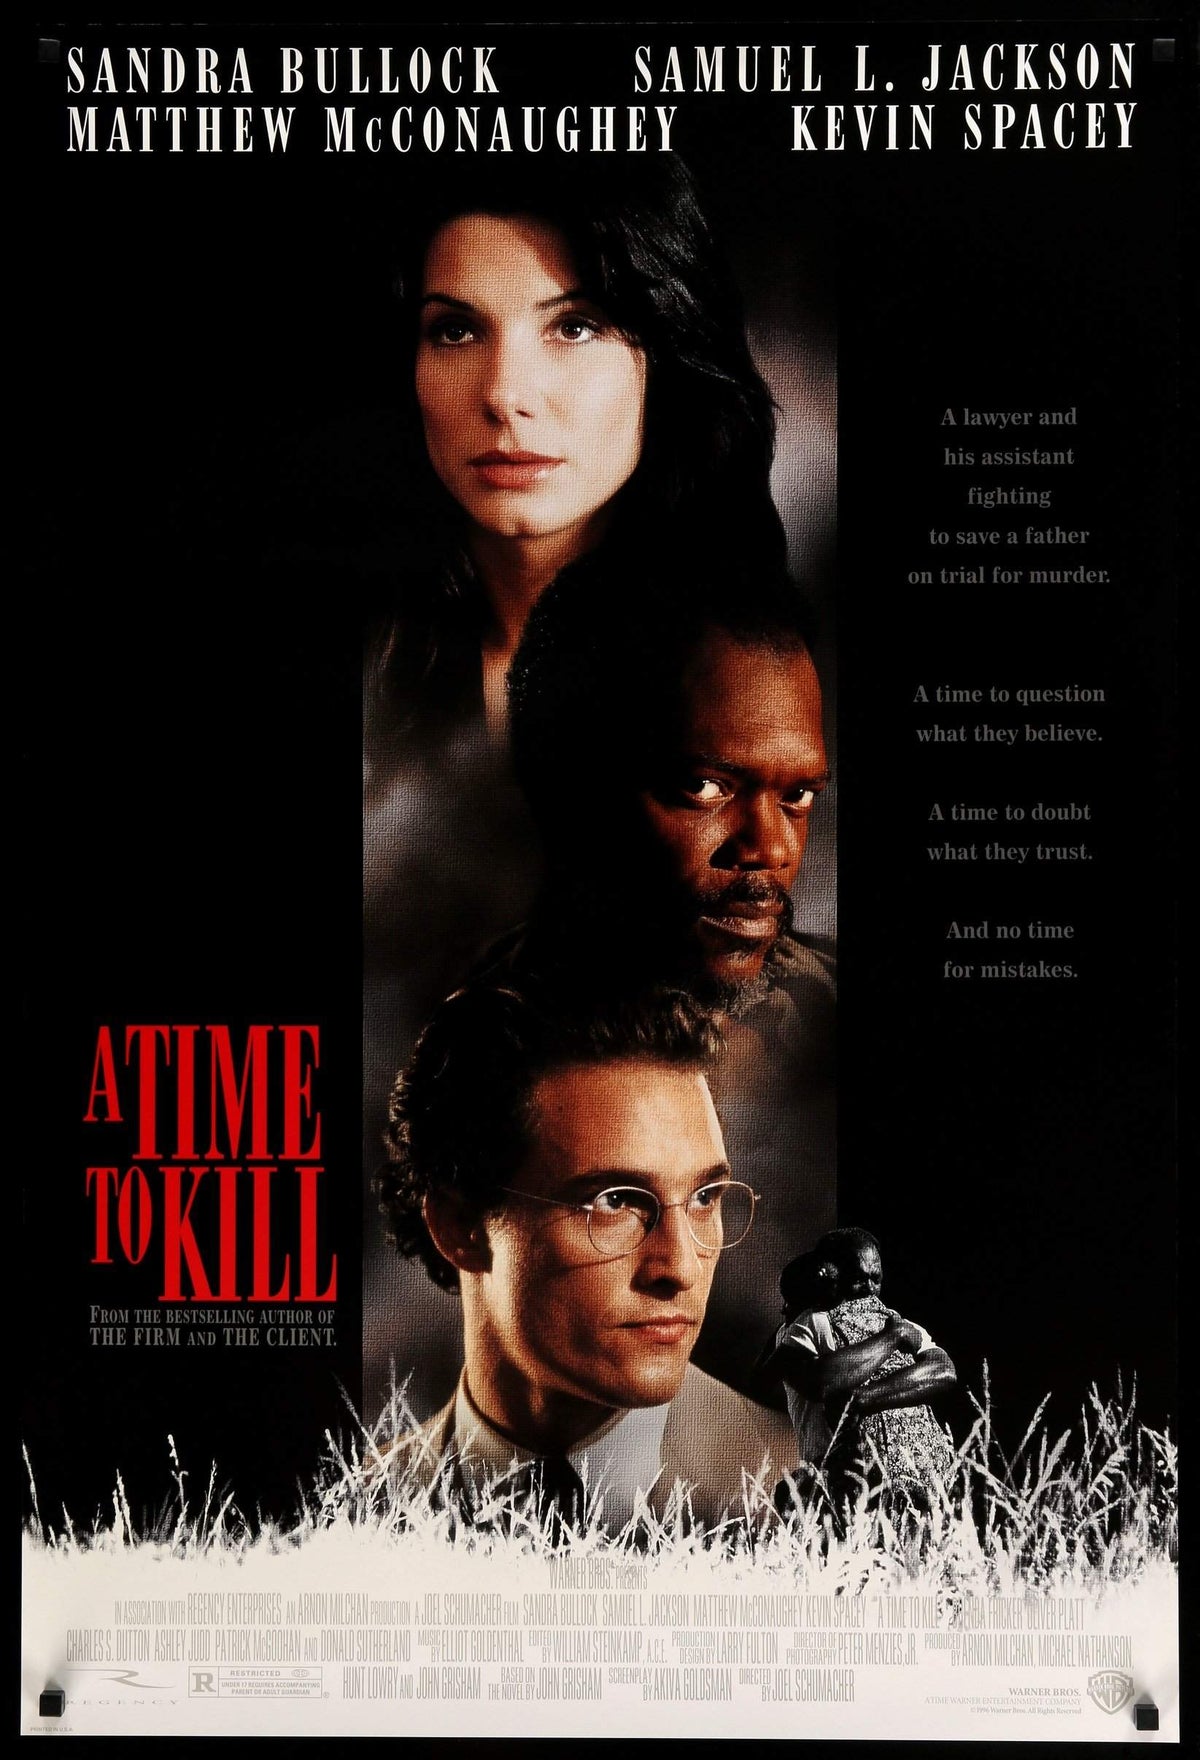 A Time to Kill (1996) original movie poster for sale at Original Film Art